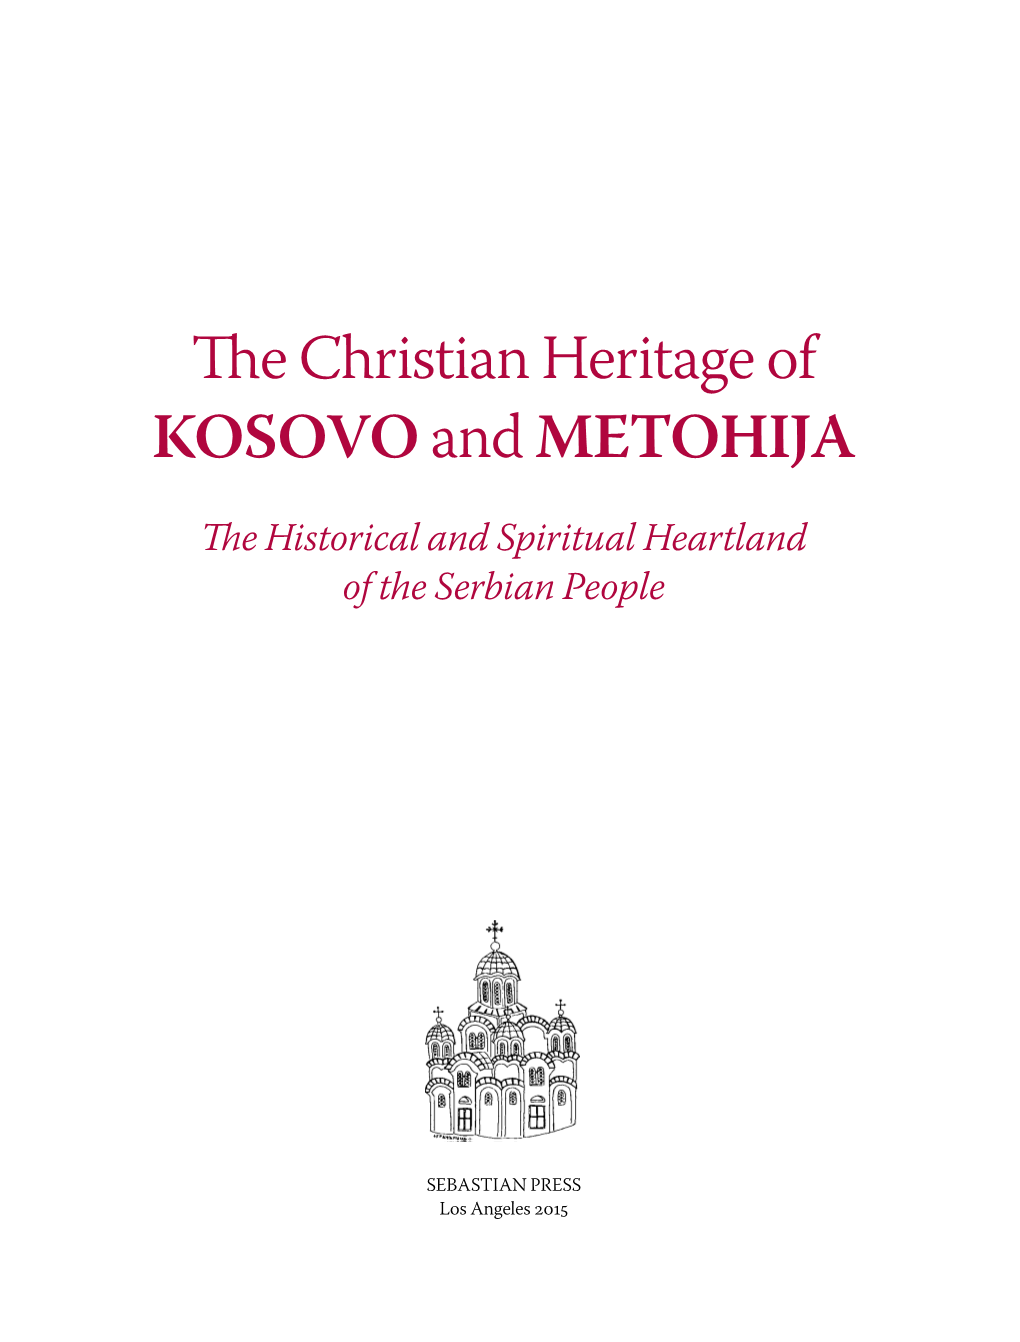 The Christian Heritage of Kosovoand METOHIJA